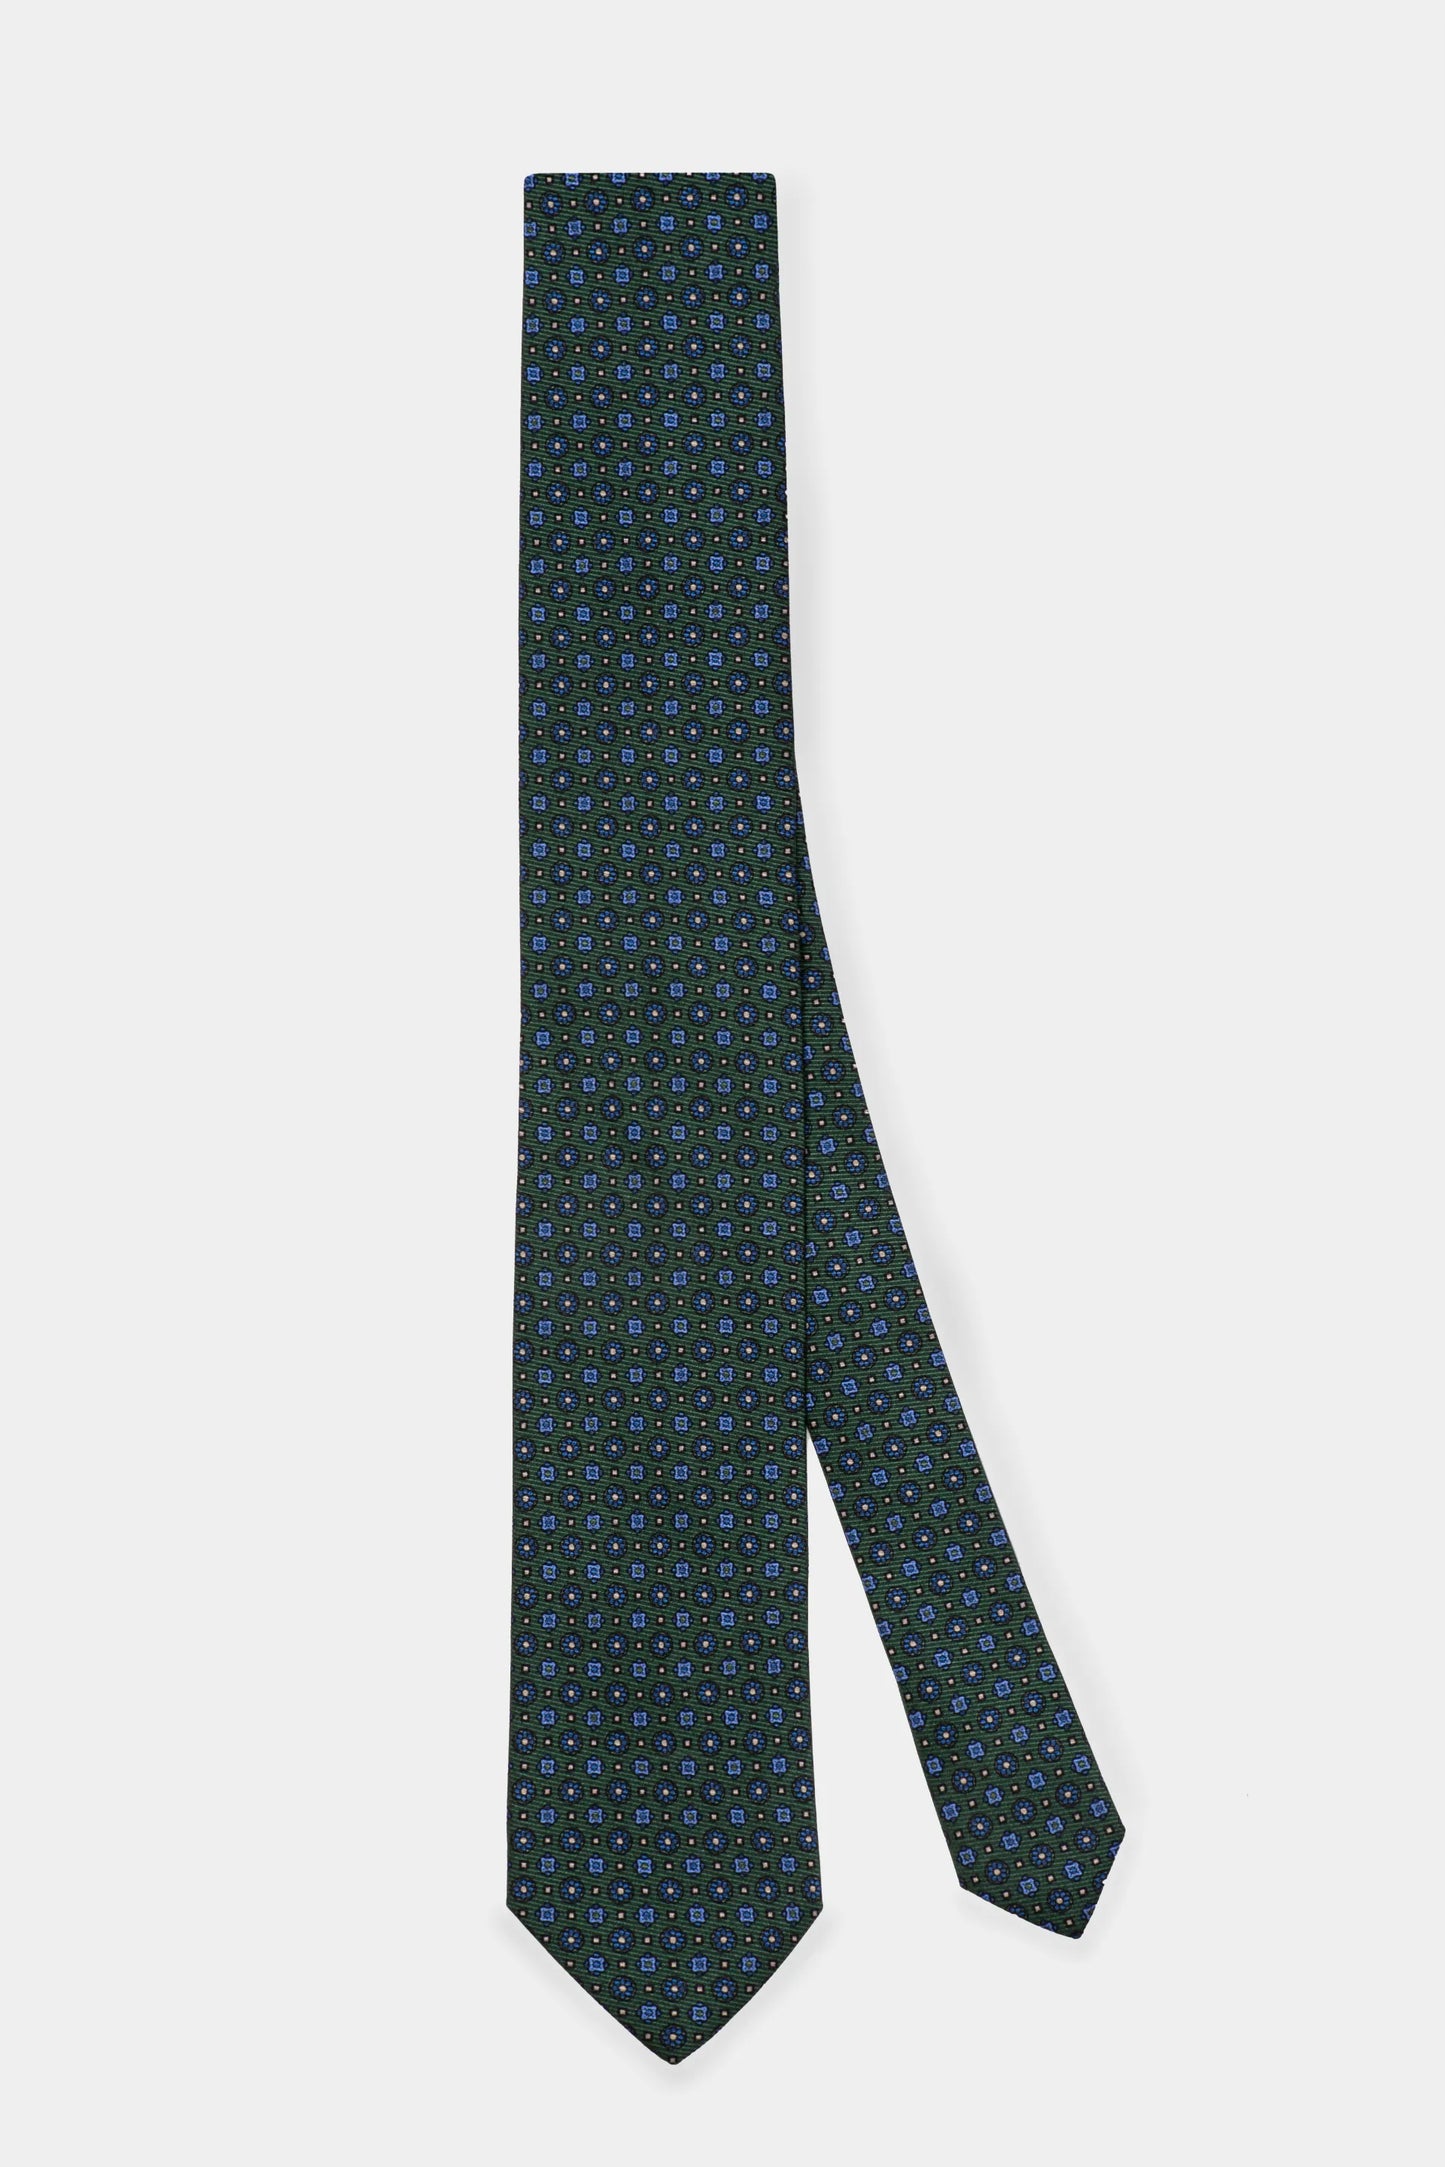 Green Print Tie